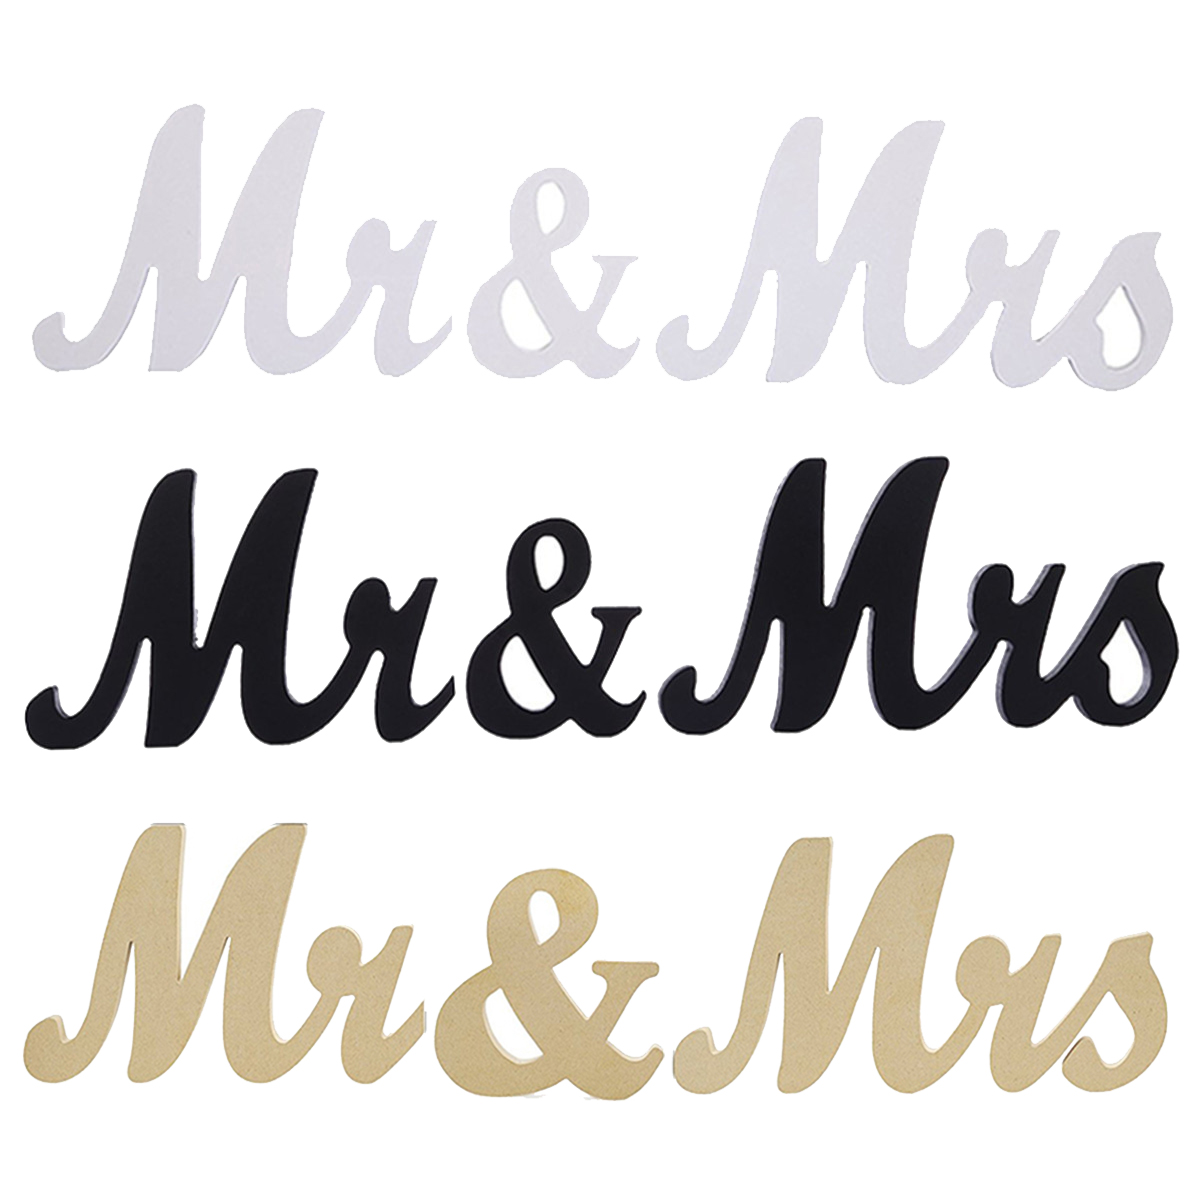  Wedding Decoration Wooden Mr & Mrs Letters